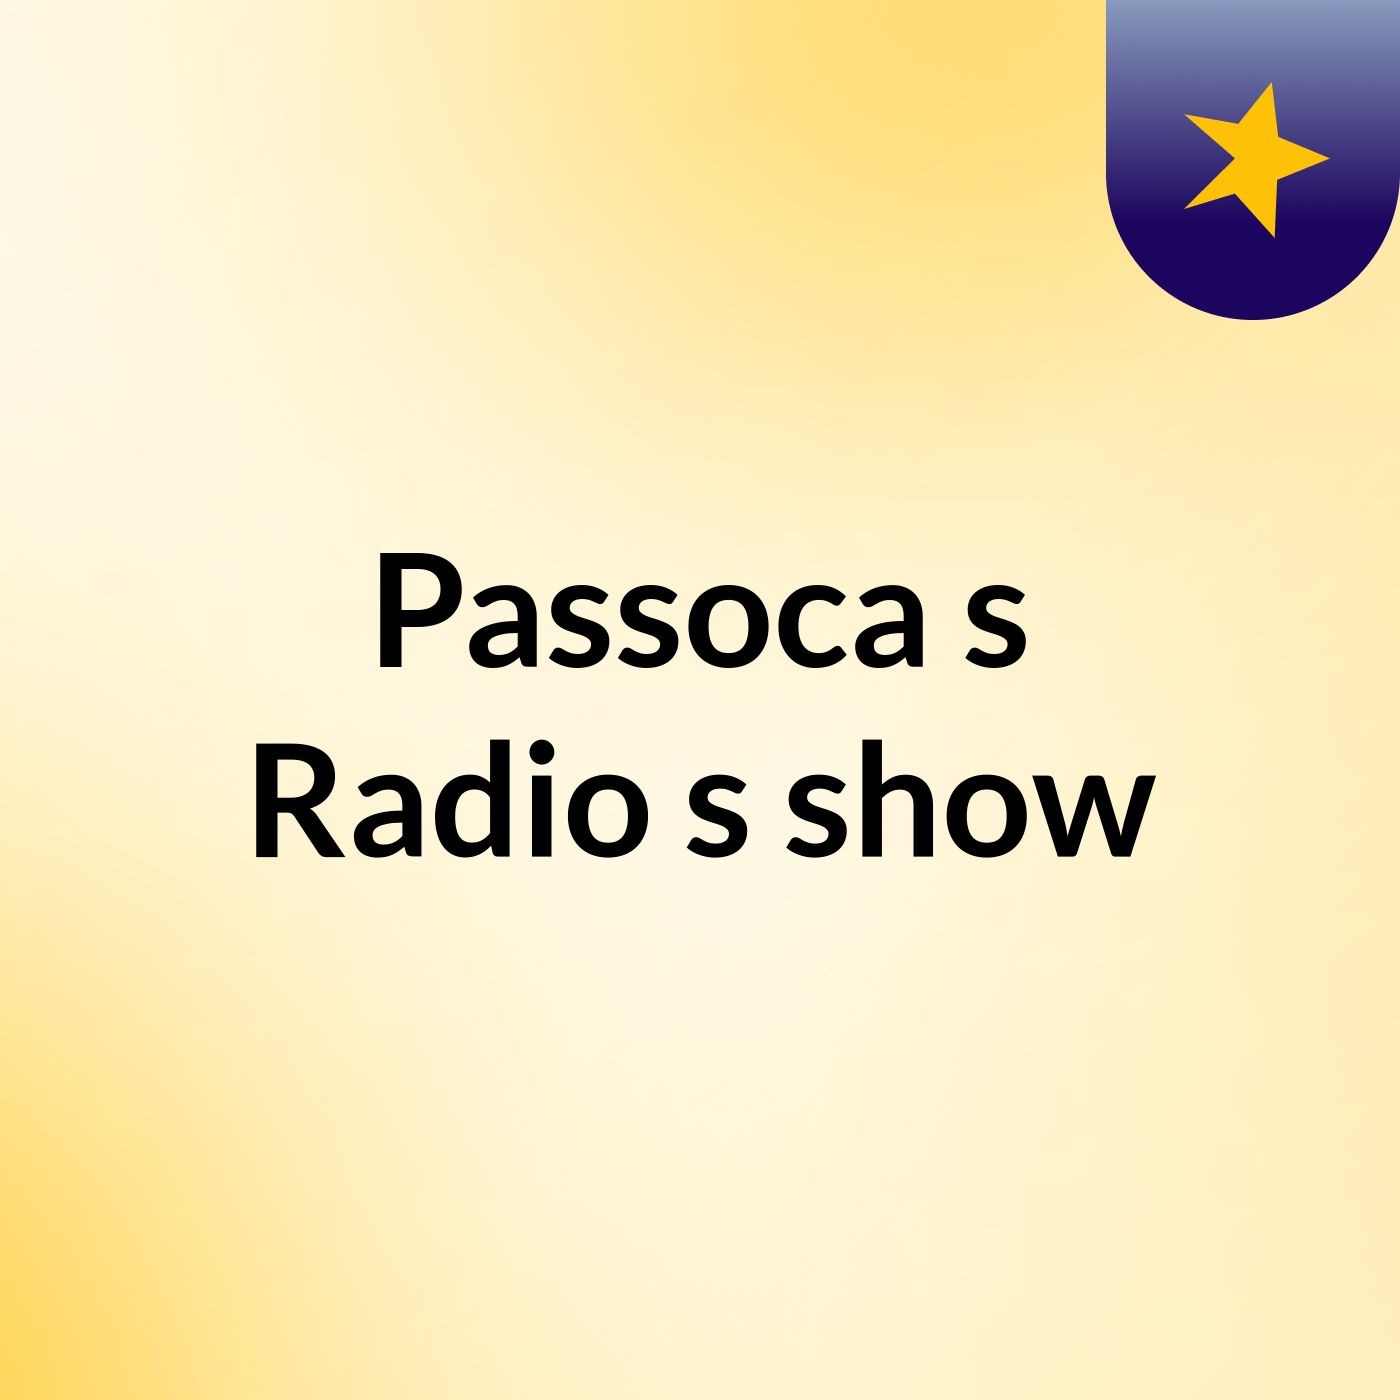 Passoca's Radio's show